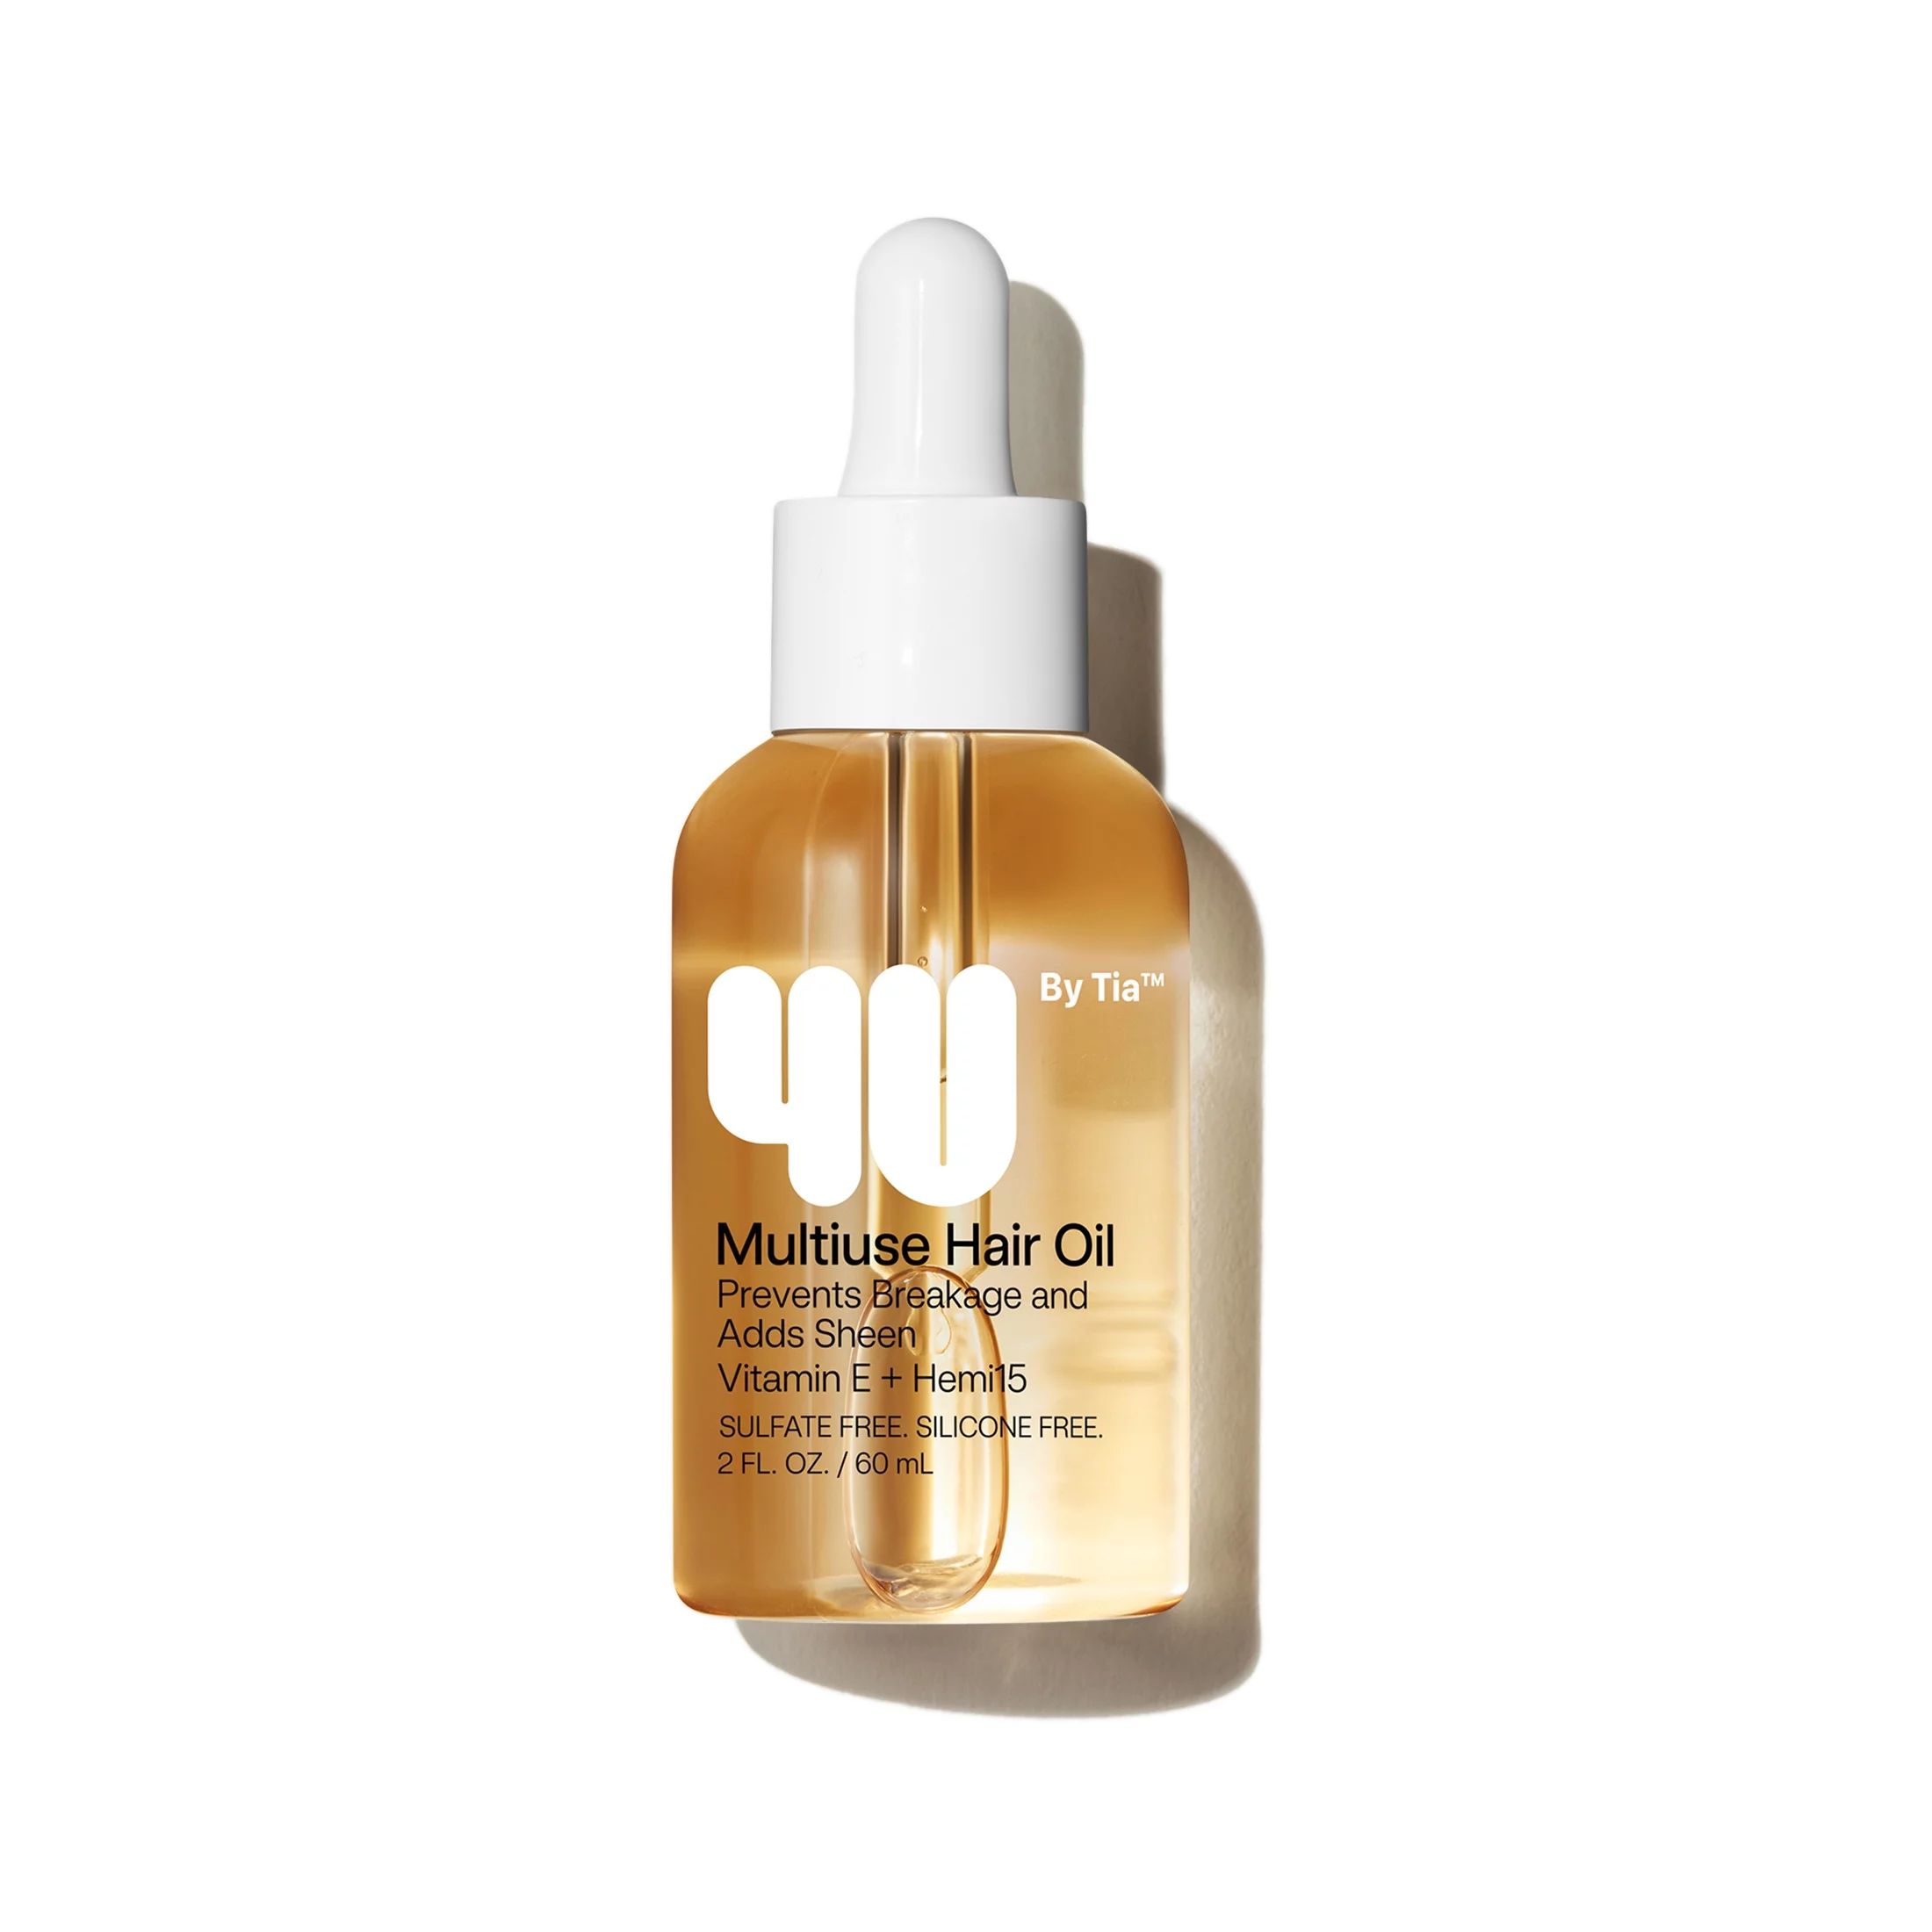 4U by Tia MultiUse Hair Oil with Vitamin E and Hemi15, 2 fl oz | Walmart (US)